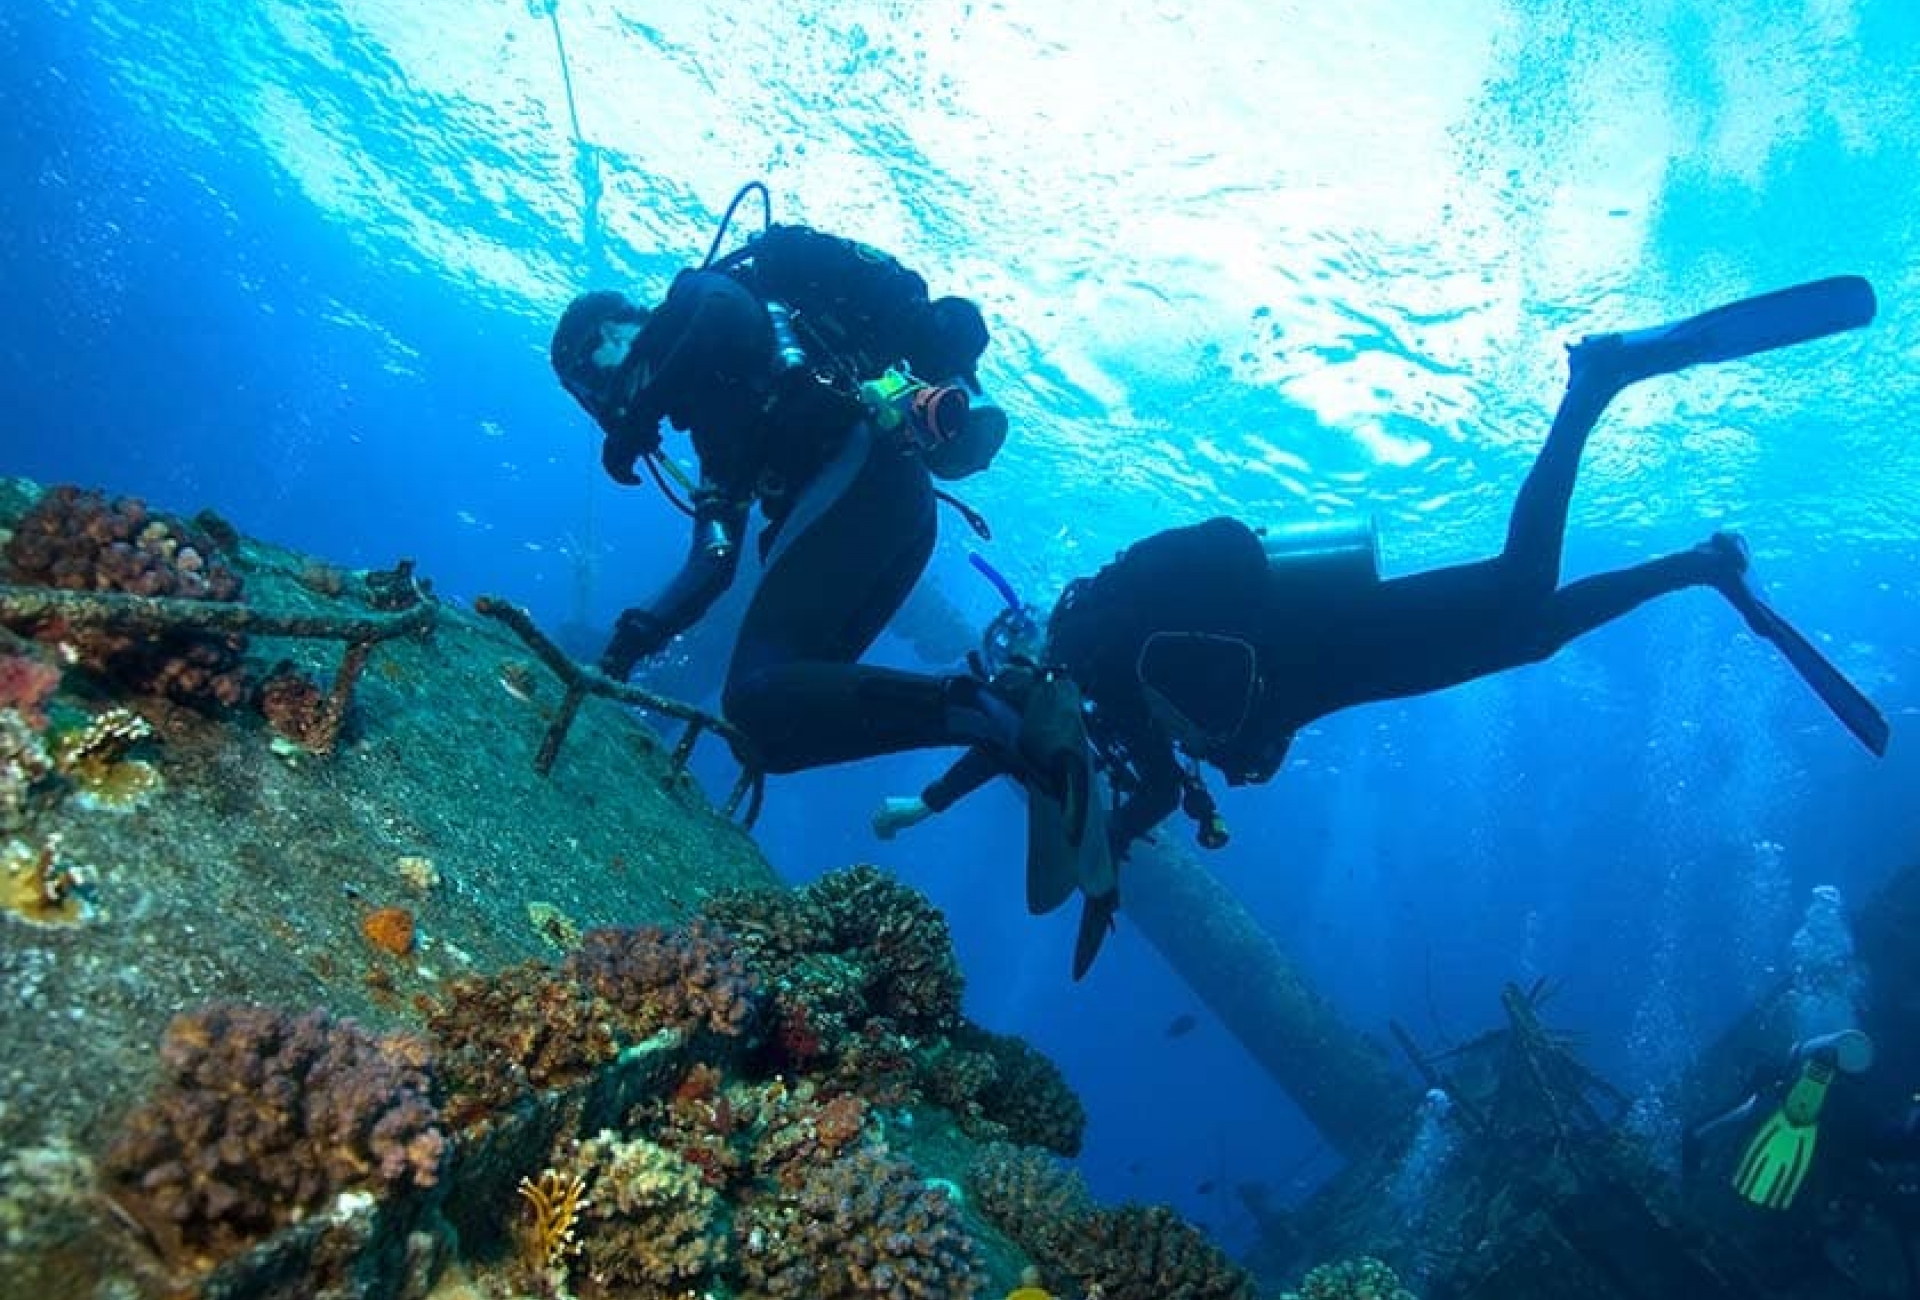 two people in snorkel gear dive under water